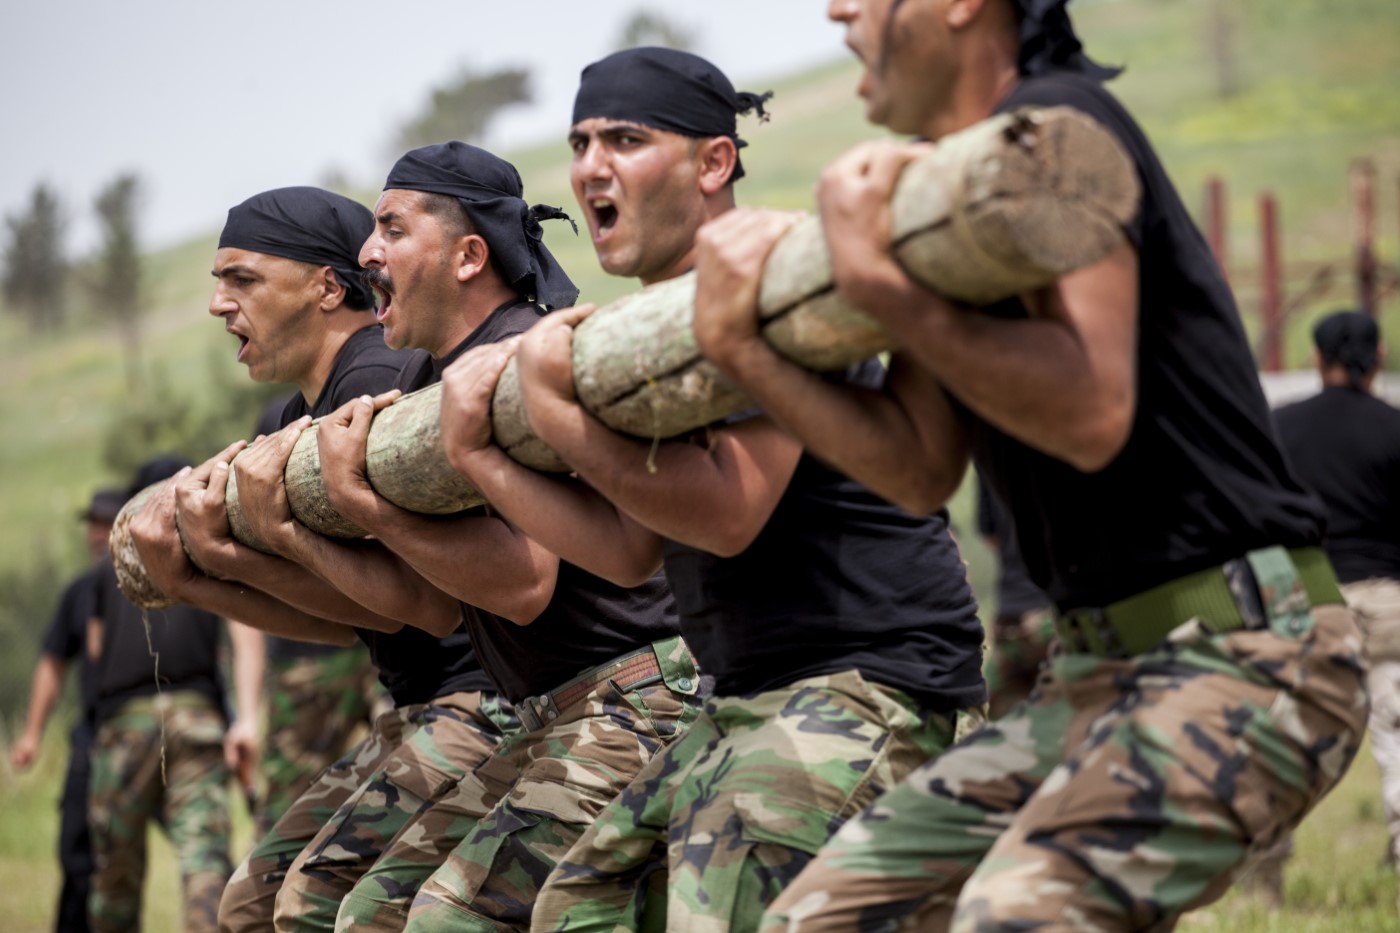 Peshmergas training their strength and endurance skills. Cobra training camp. Sulaymaniyah, Said-Sadiq, Kurdistan, Iraq. April 25, 2017